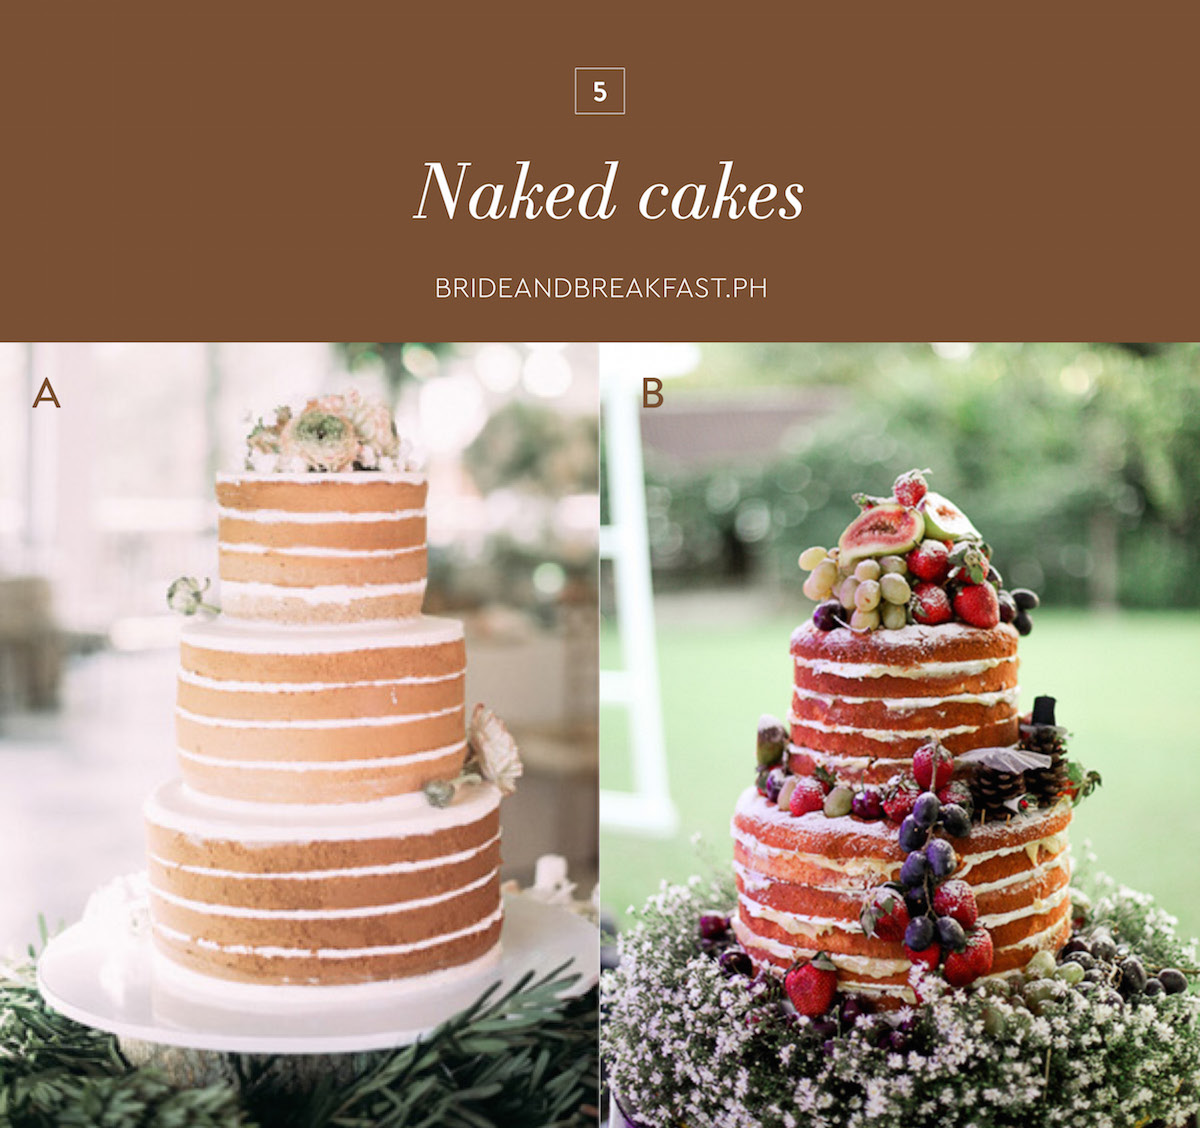 5 Naked cakes